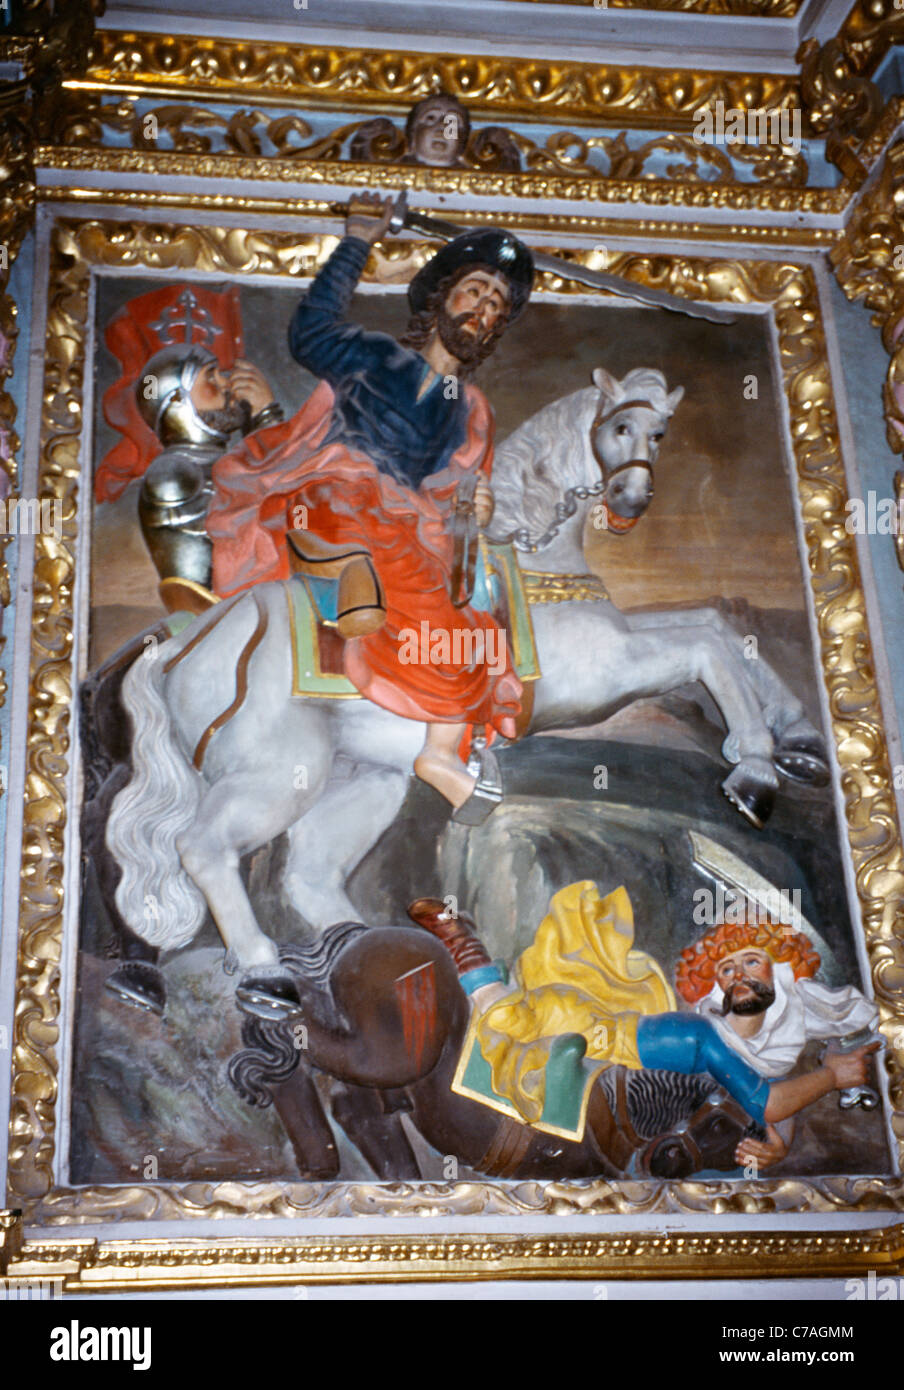 Tui Galicia Spain Cathedral De Santa Maria Painting On Altar Depicting Saint James Matamoros Saint James Depicted As A Knight Stock Photo